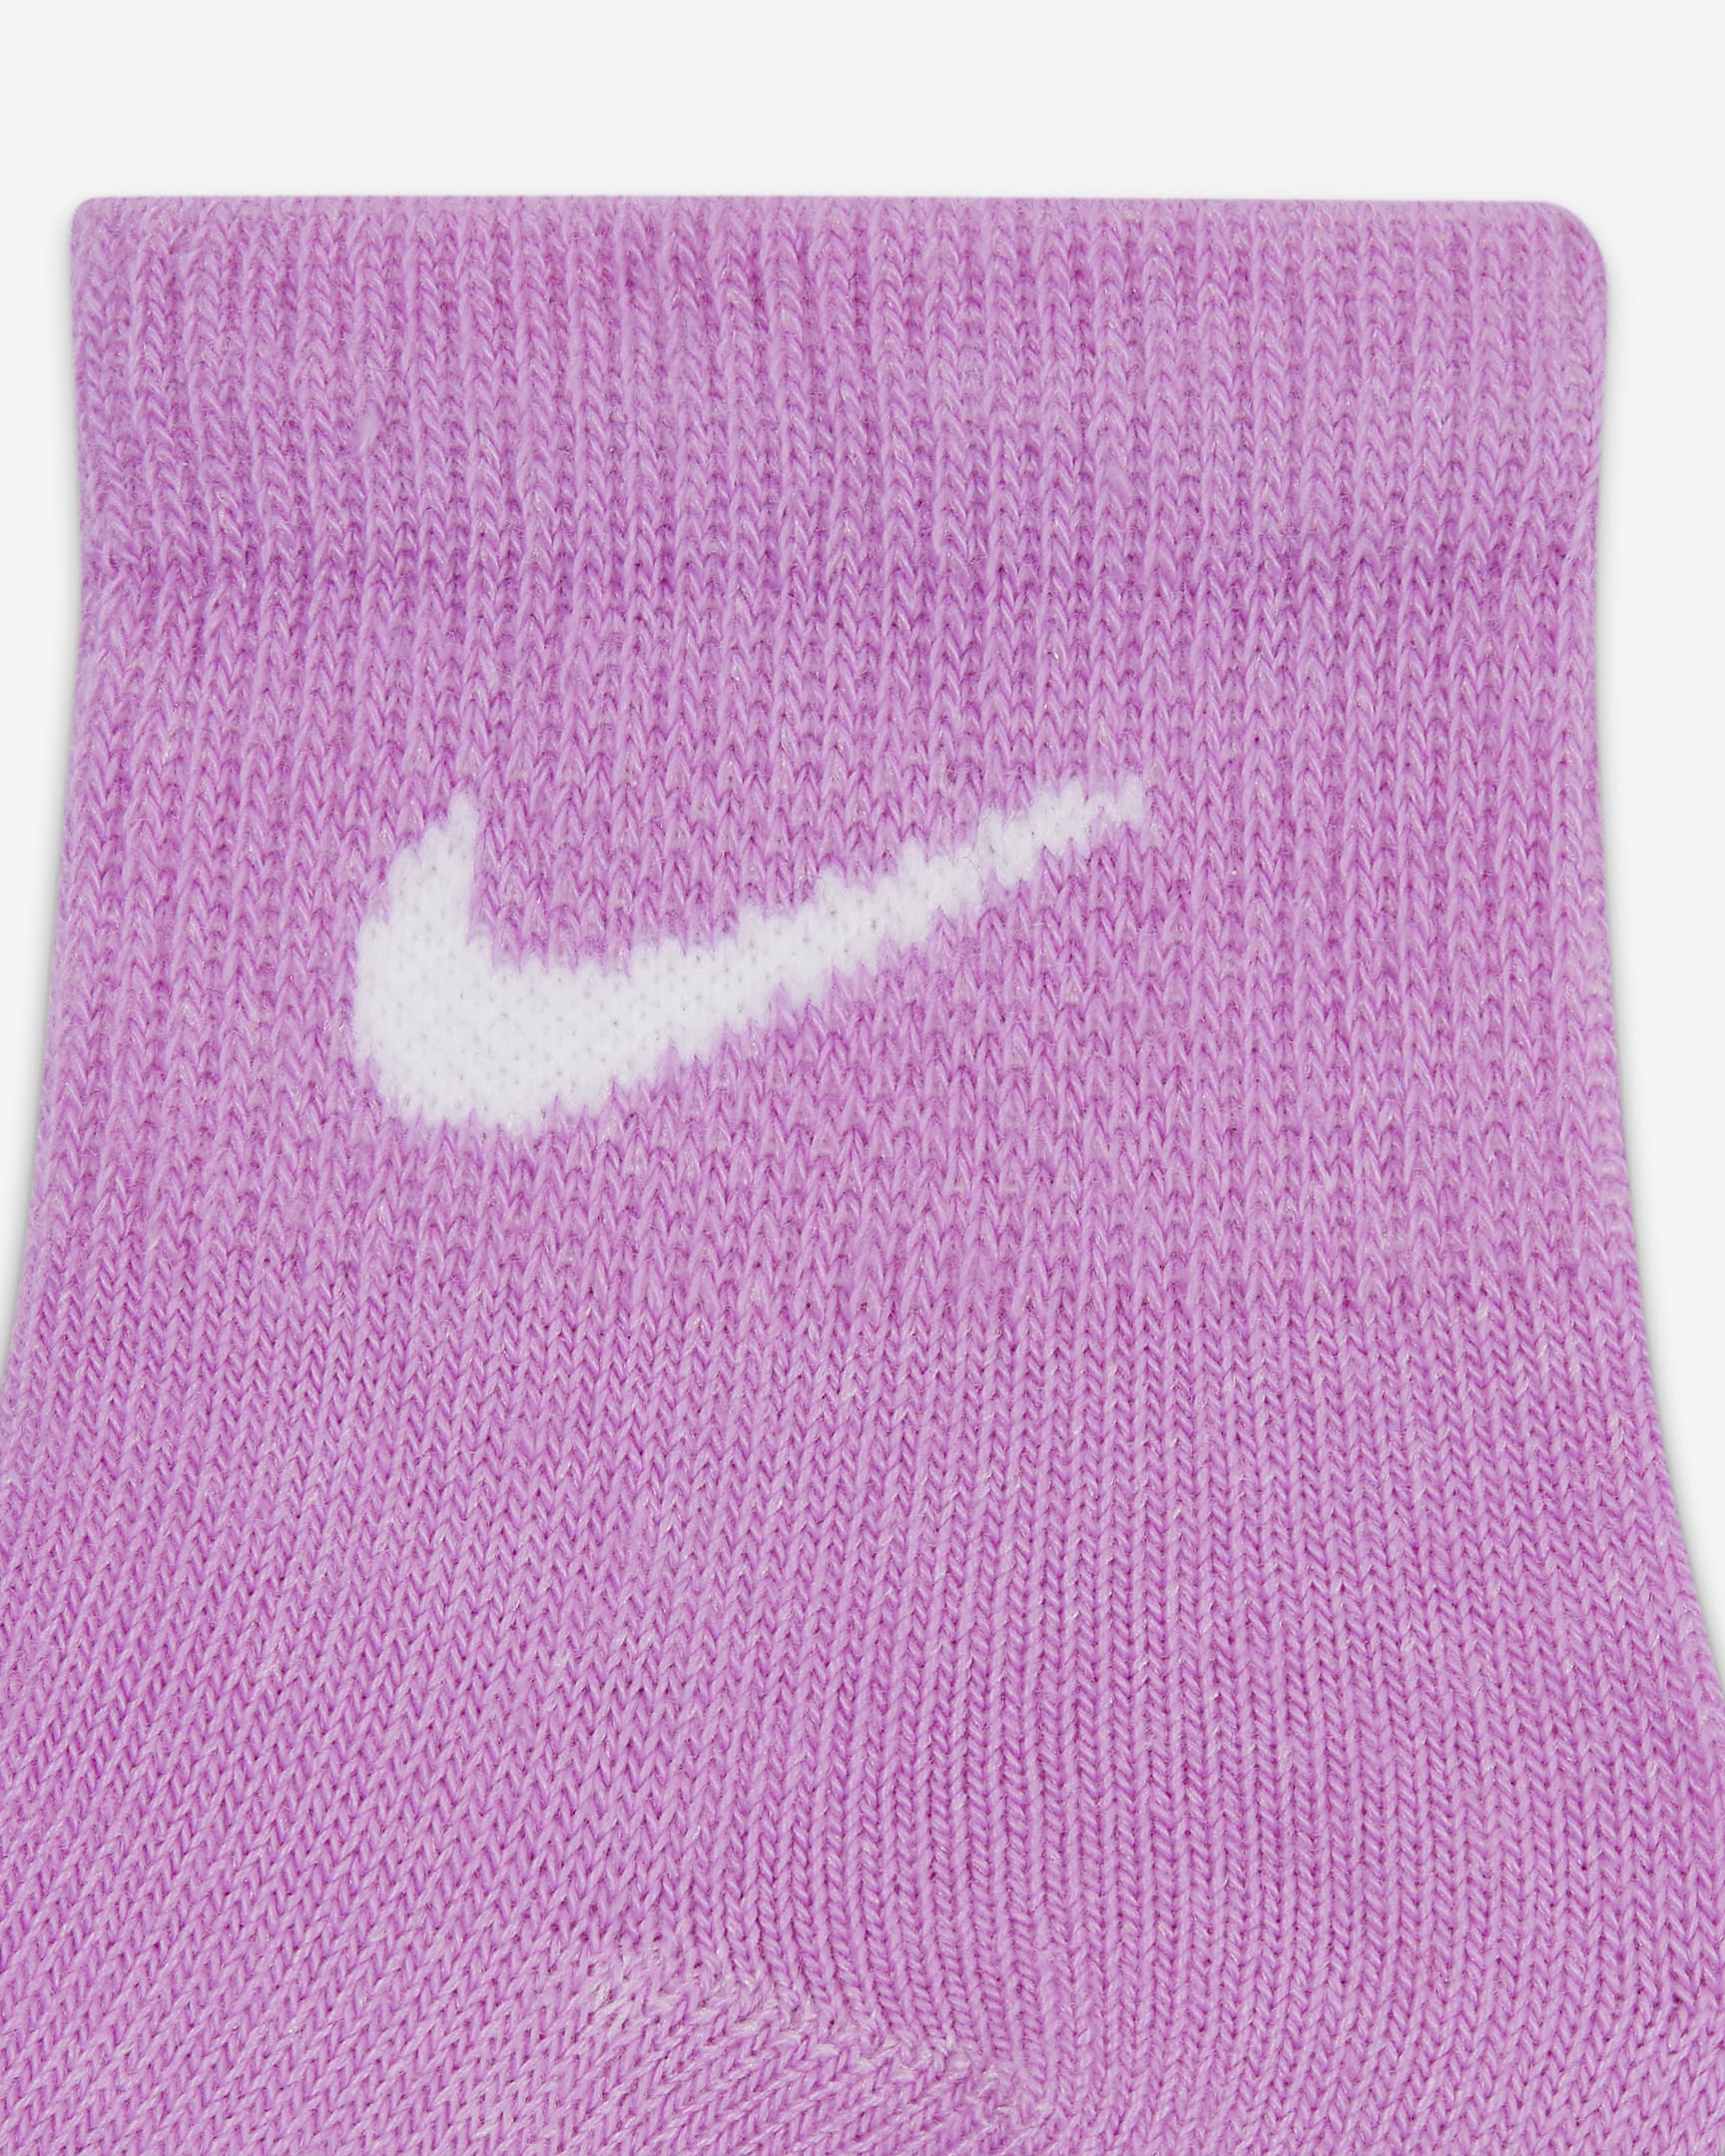 Nike Little Kids' Ankle Socks (6 Pairs). Nike.com